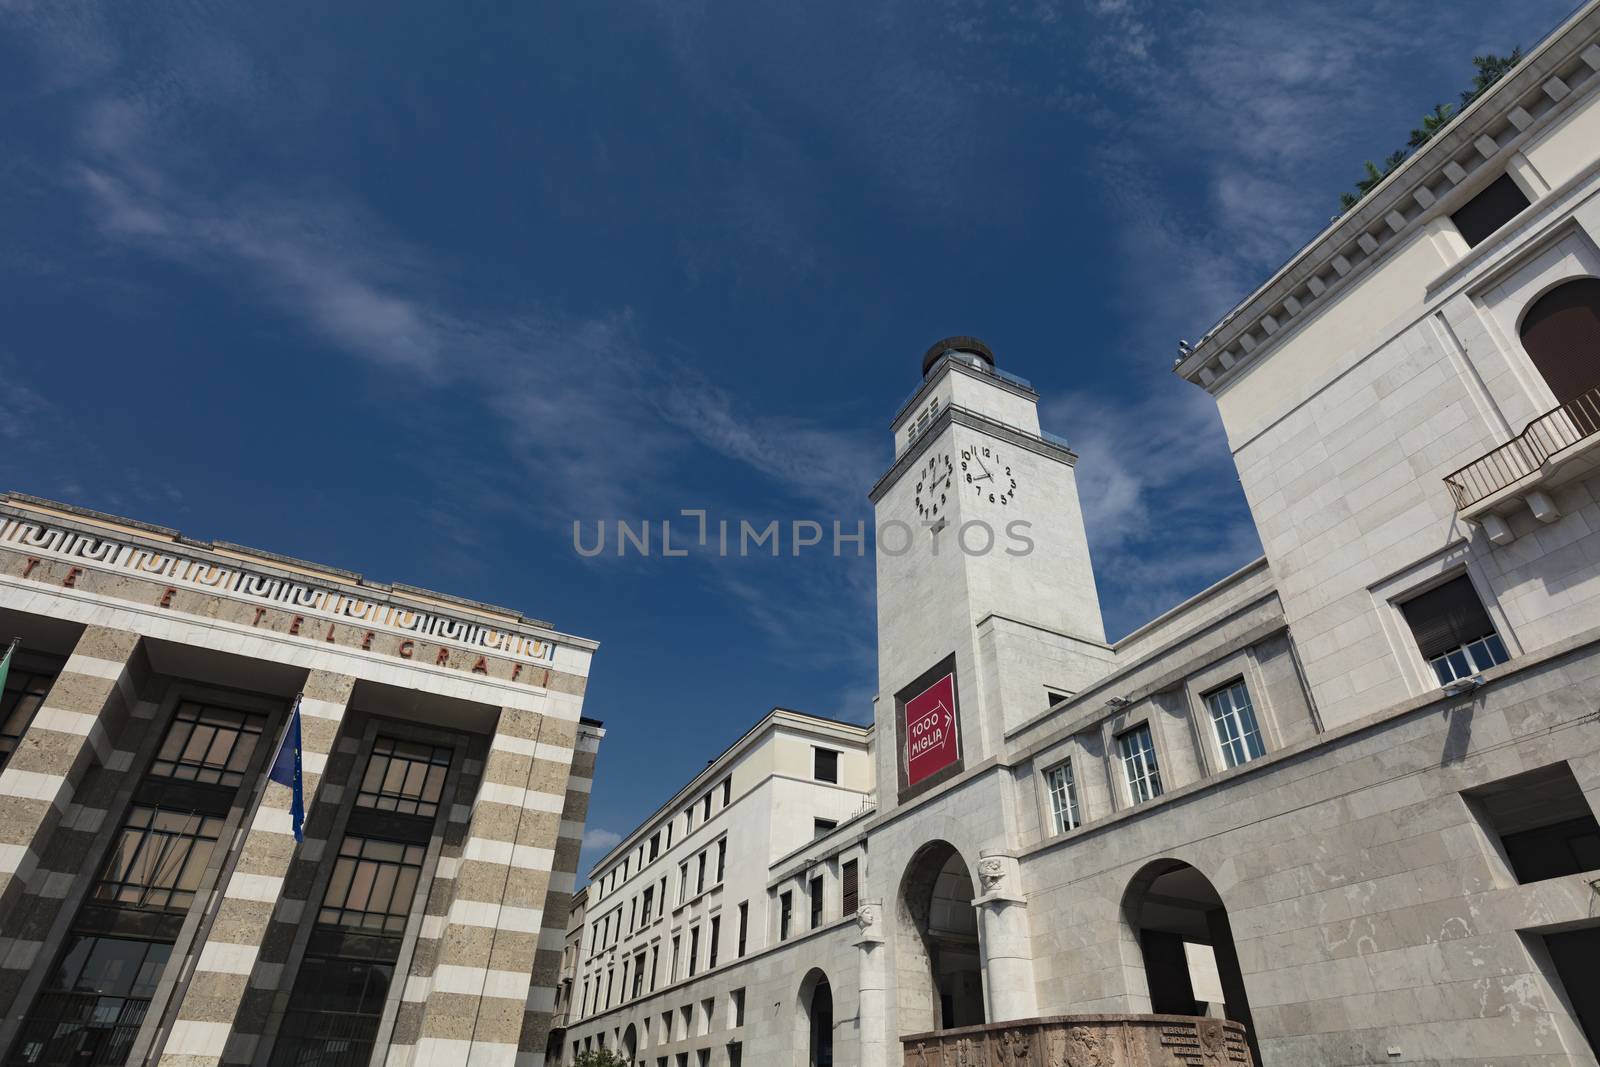 Brescia, Italy, Europe, August 2019, a view of the buildings in the Piazza della Vittoria
